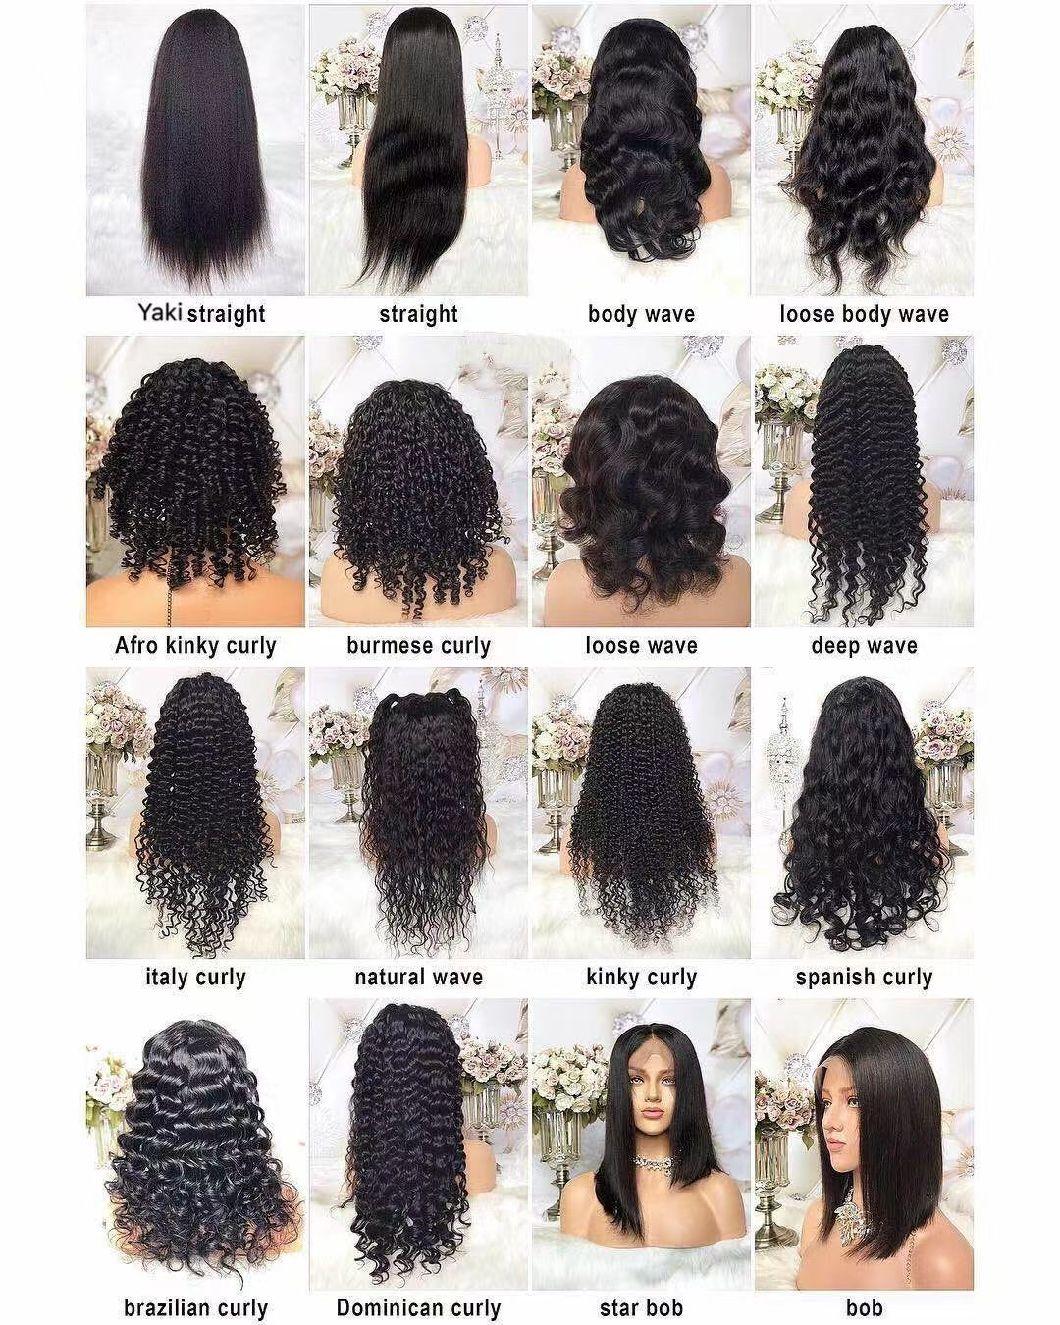 Hot Selling 10A Grade Burmese/Cambodia Cuticle Aligned Human Hair Wigs 180% Density Short Straight